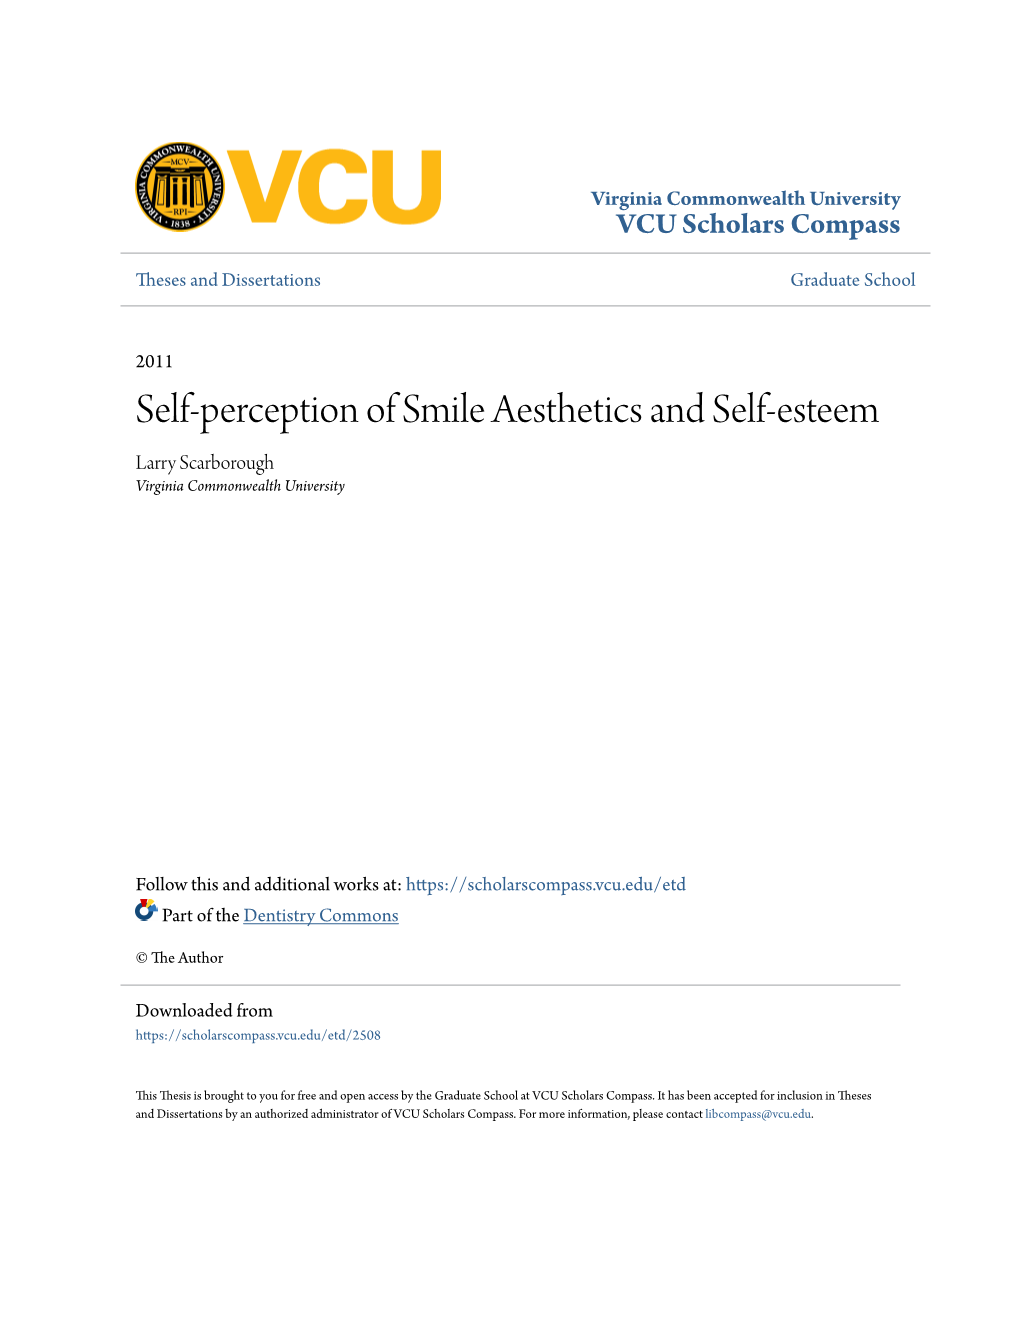 Self-Perception of Smile Aesthetics and Self-Esteem Larry Scarborough Virginia Commonwealth University